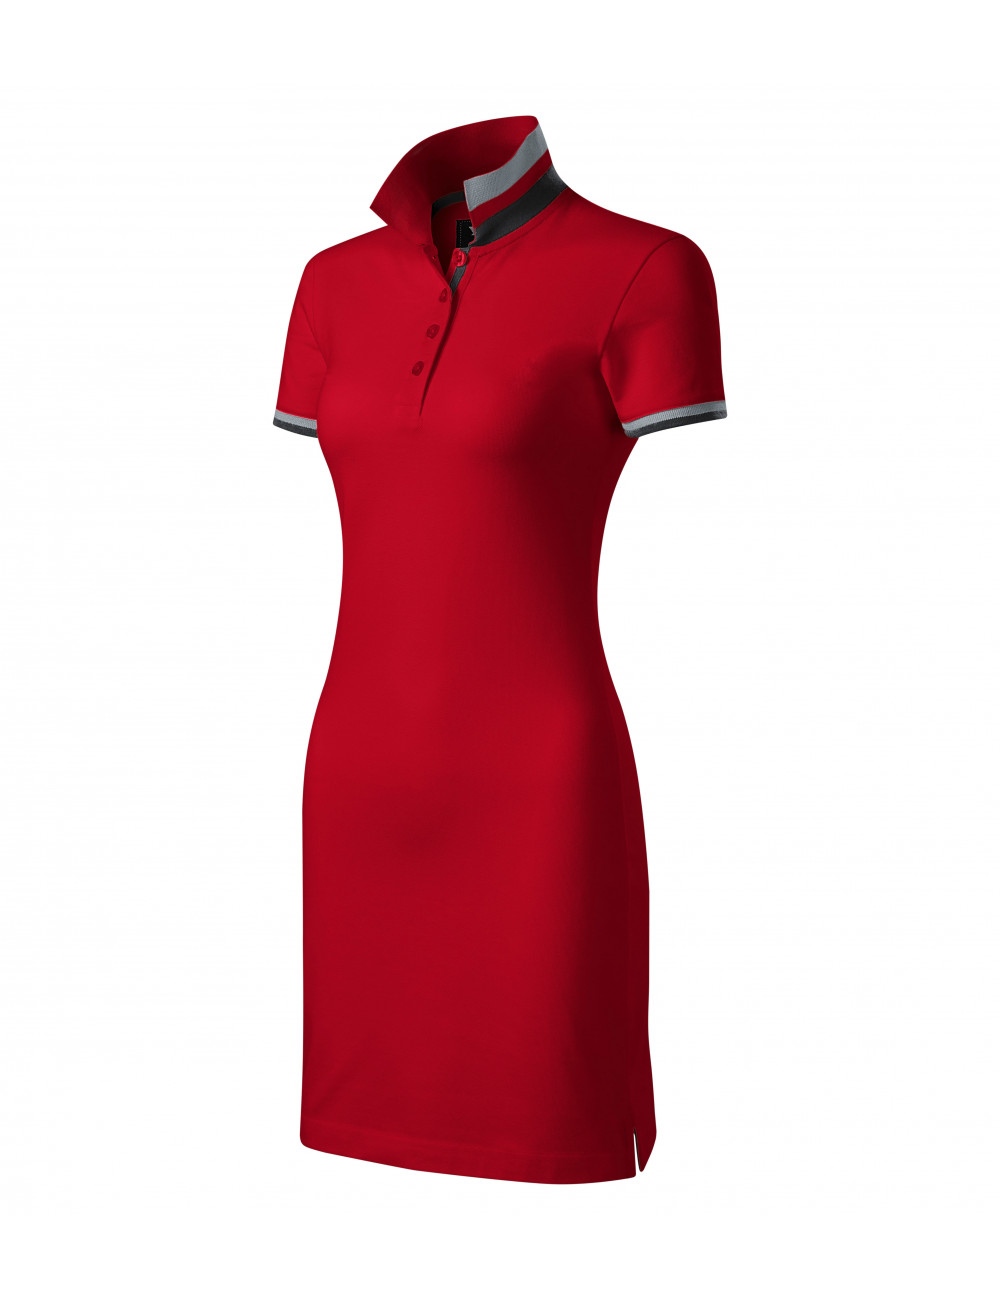 Women`s dress dress up 271 formula red Adler Malfinipremium